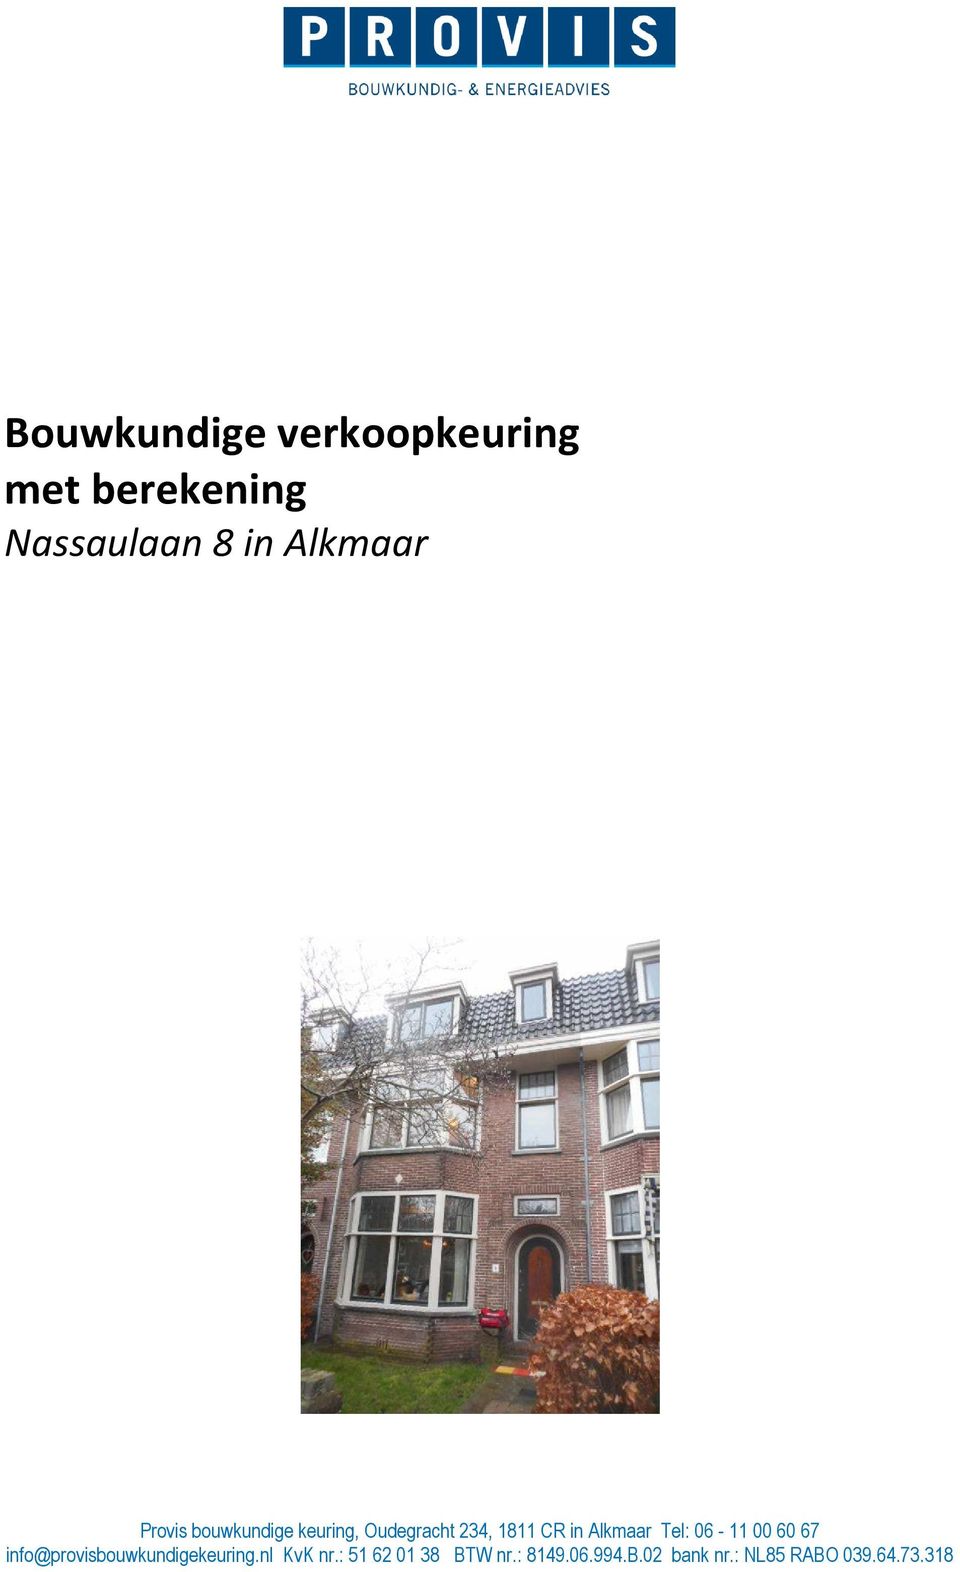 Tel: 06-11 00 60 67 info@provisbouwkundigekeuring.nl KvK nr.